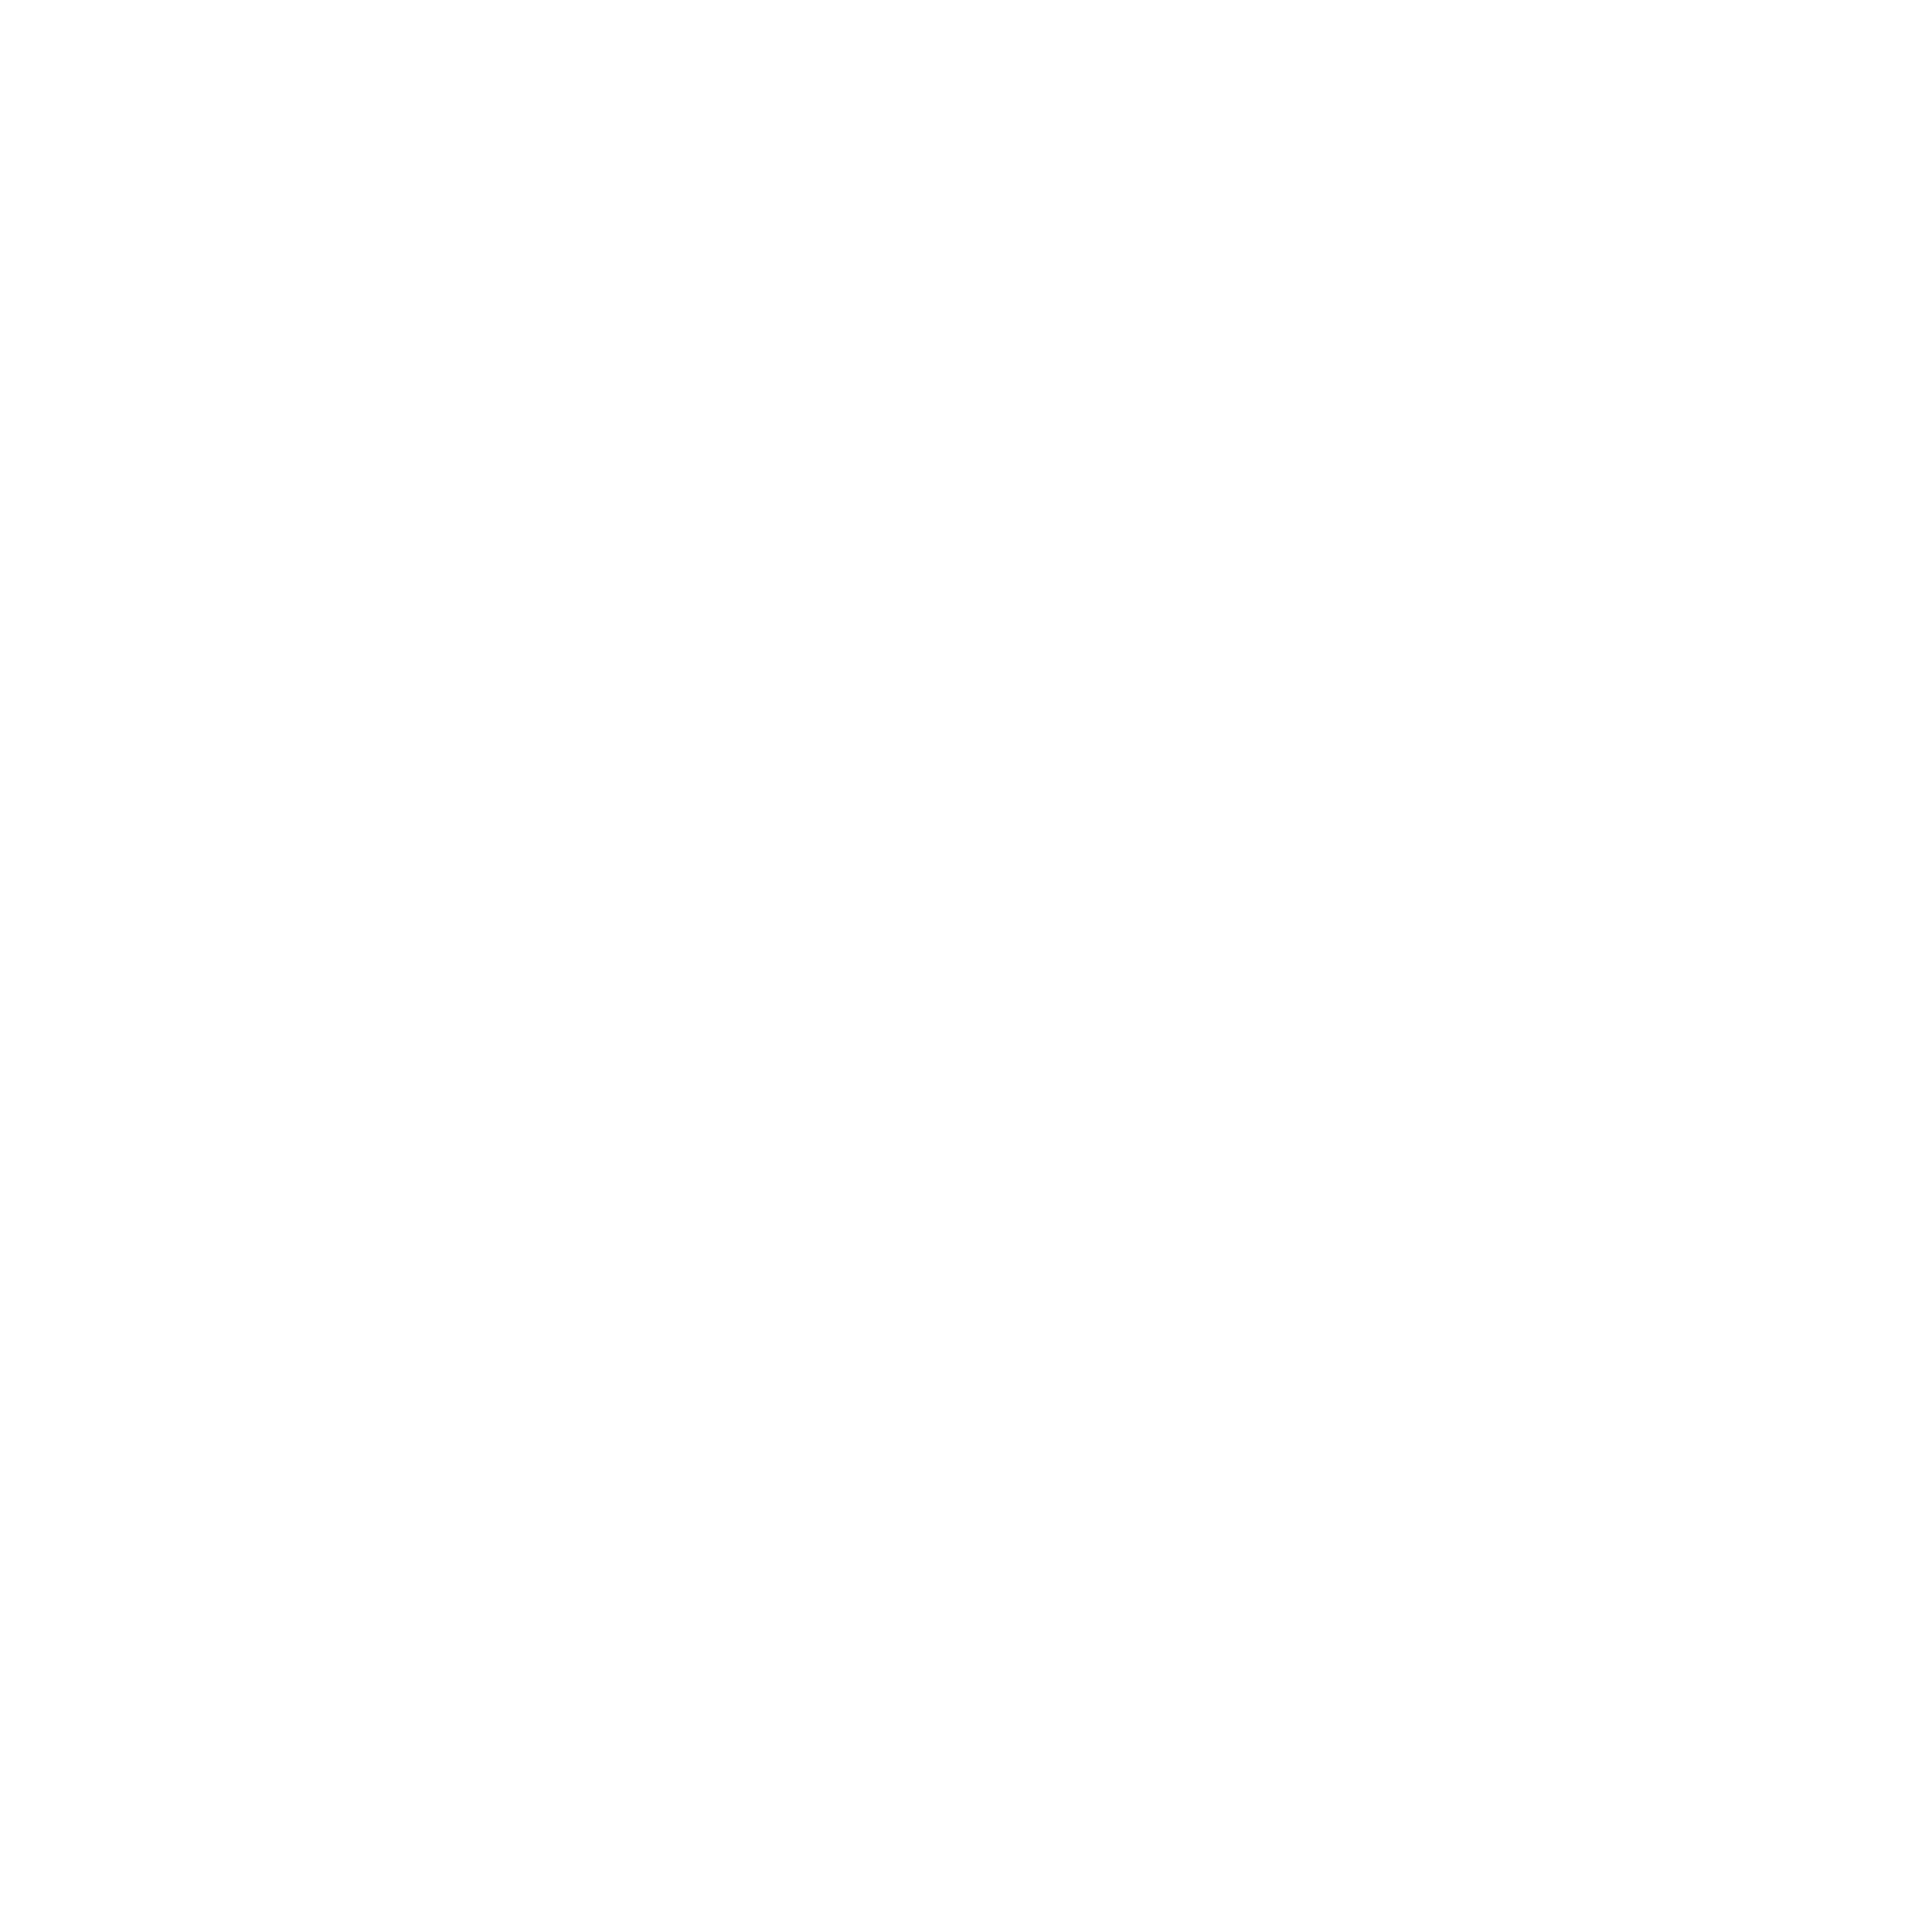 WALK 2 WELLNESS